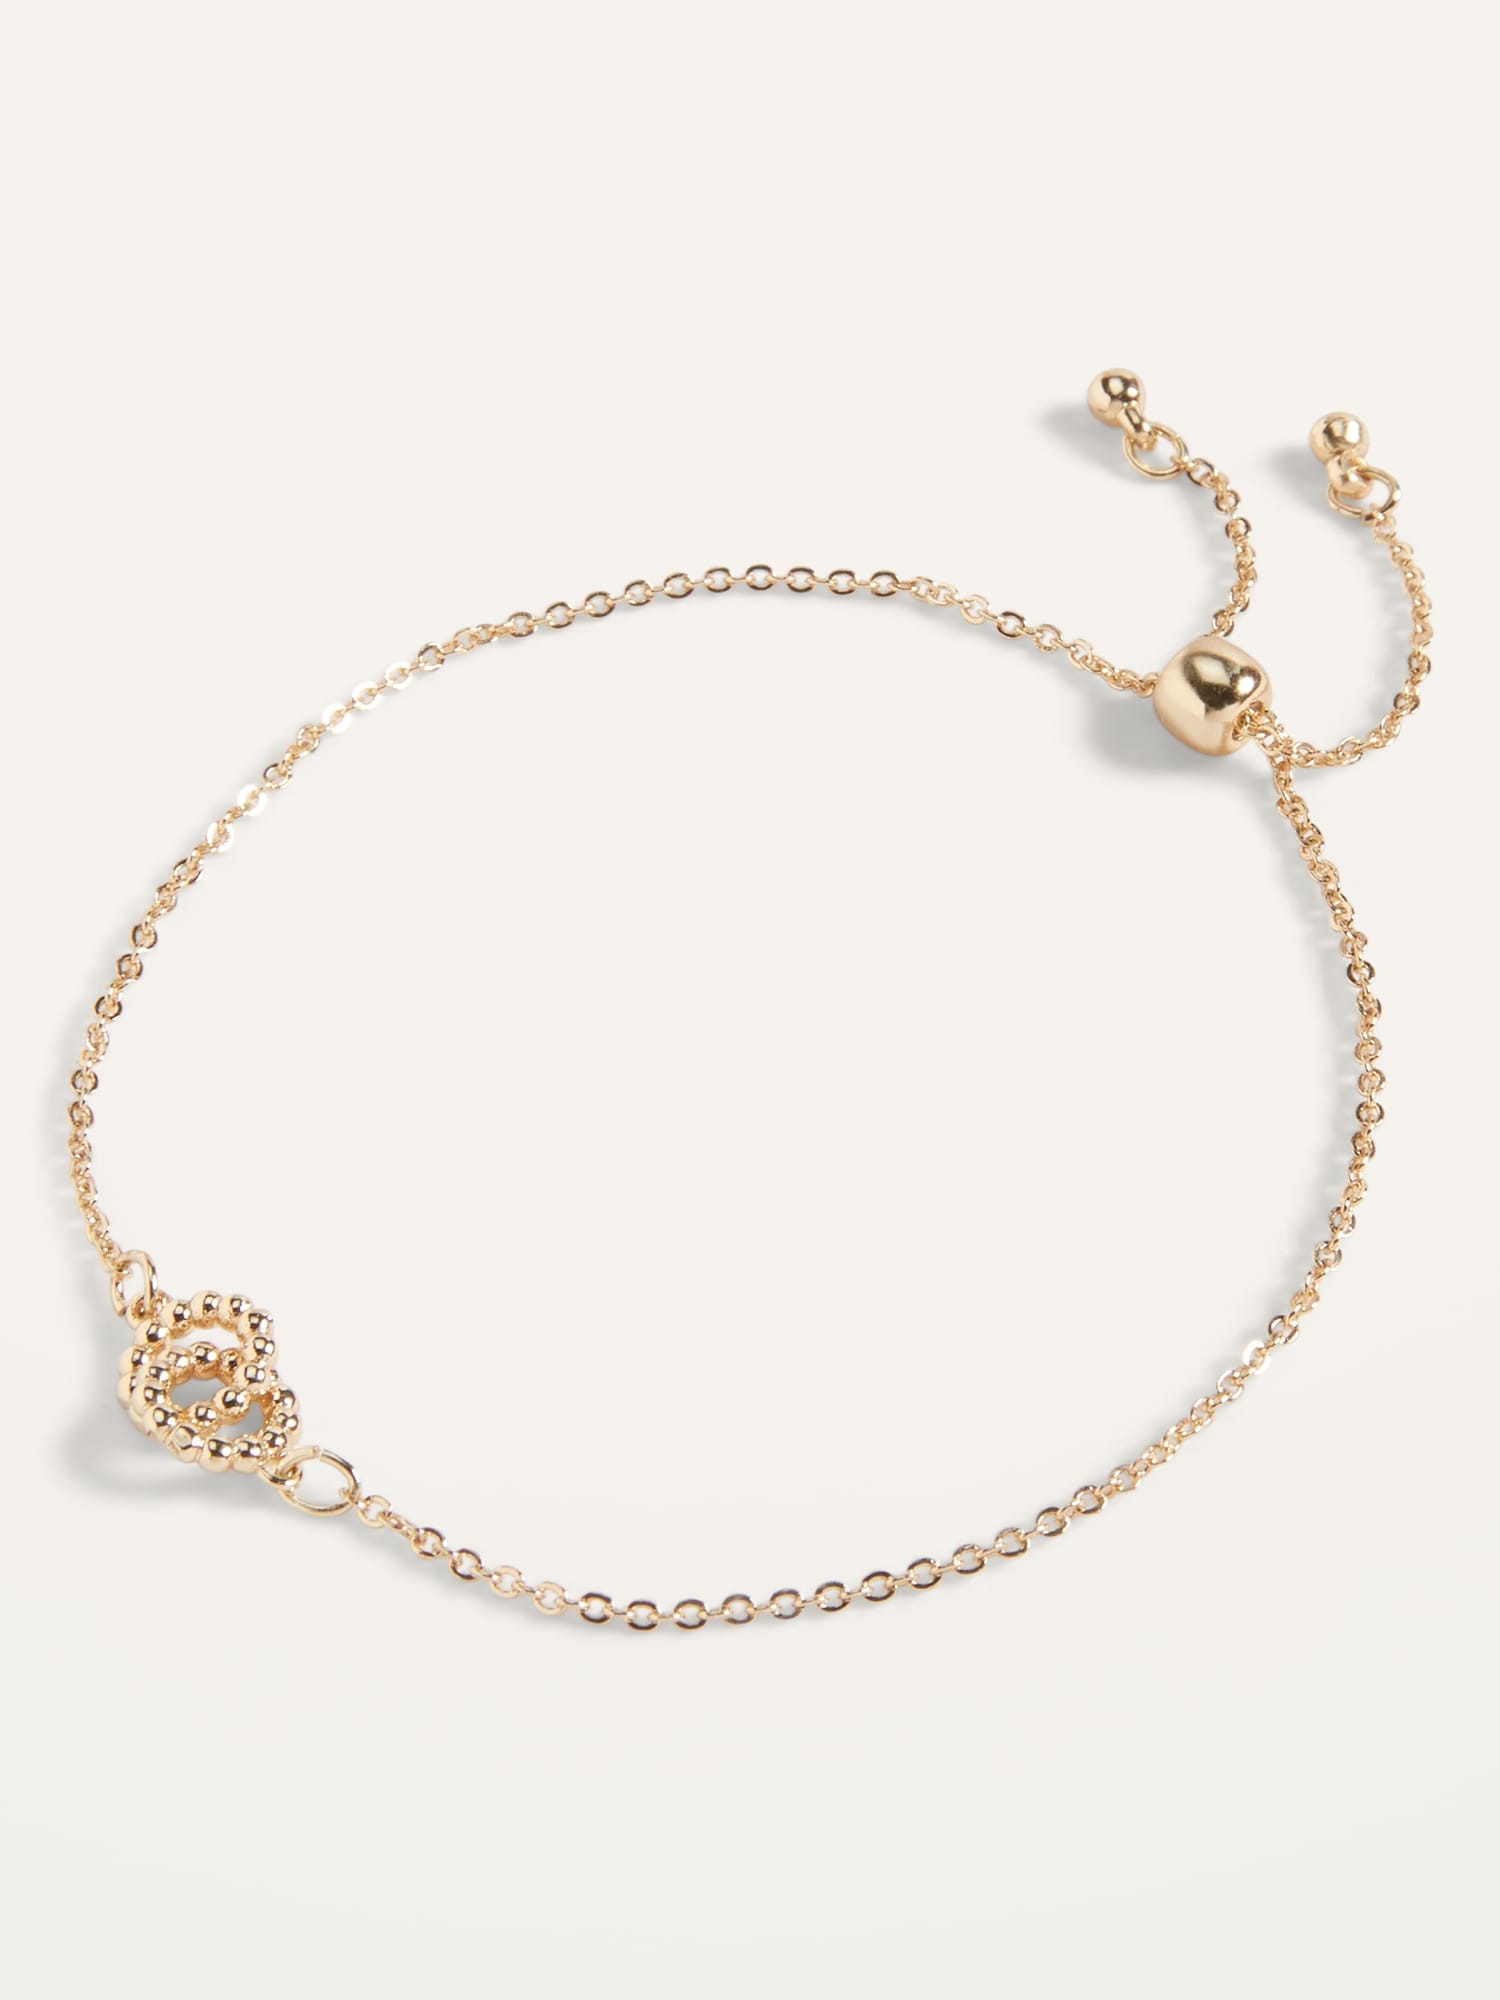 Real Gold-Plated Pendant Chain Bracelet For Women